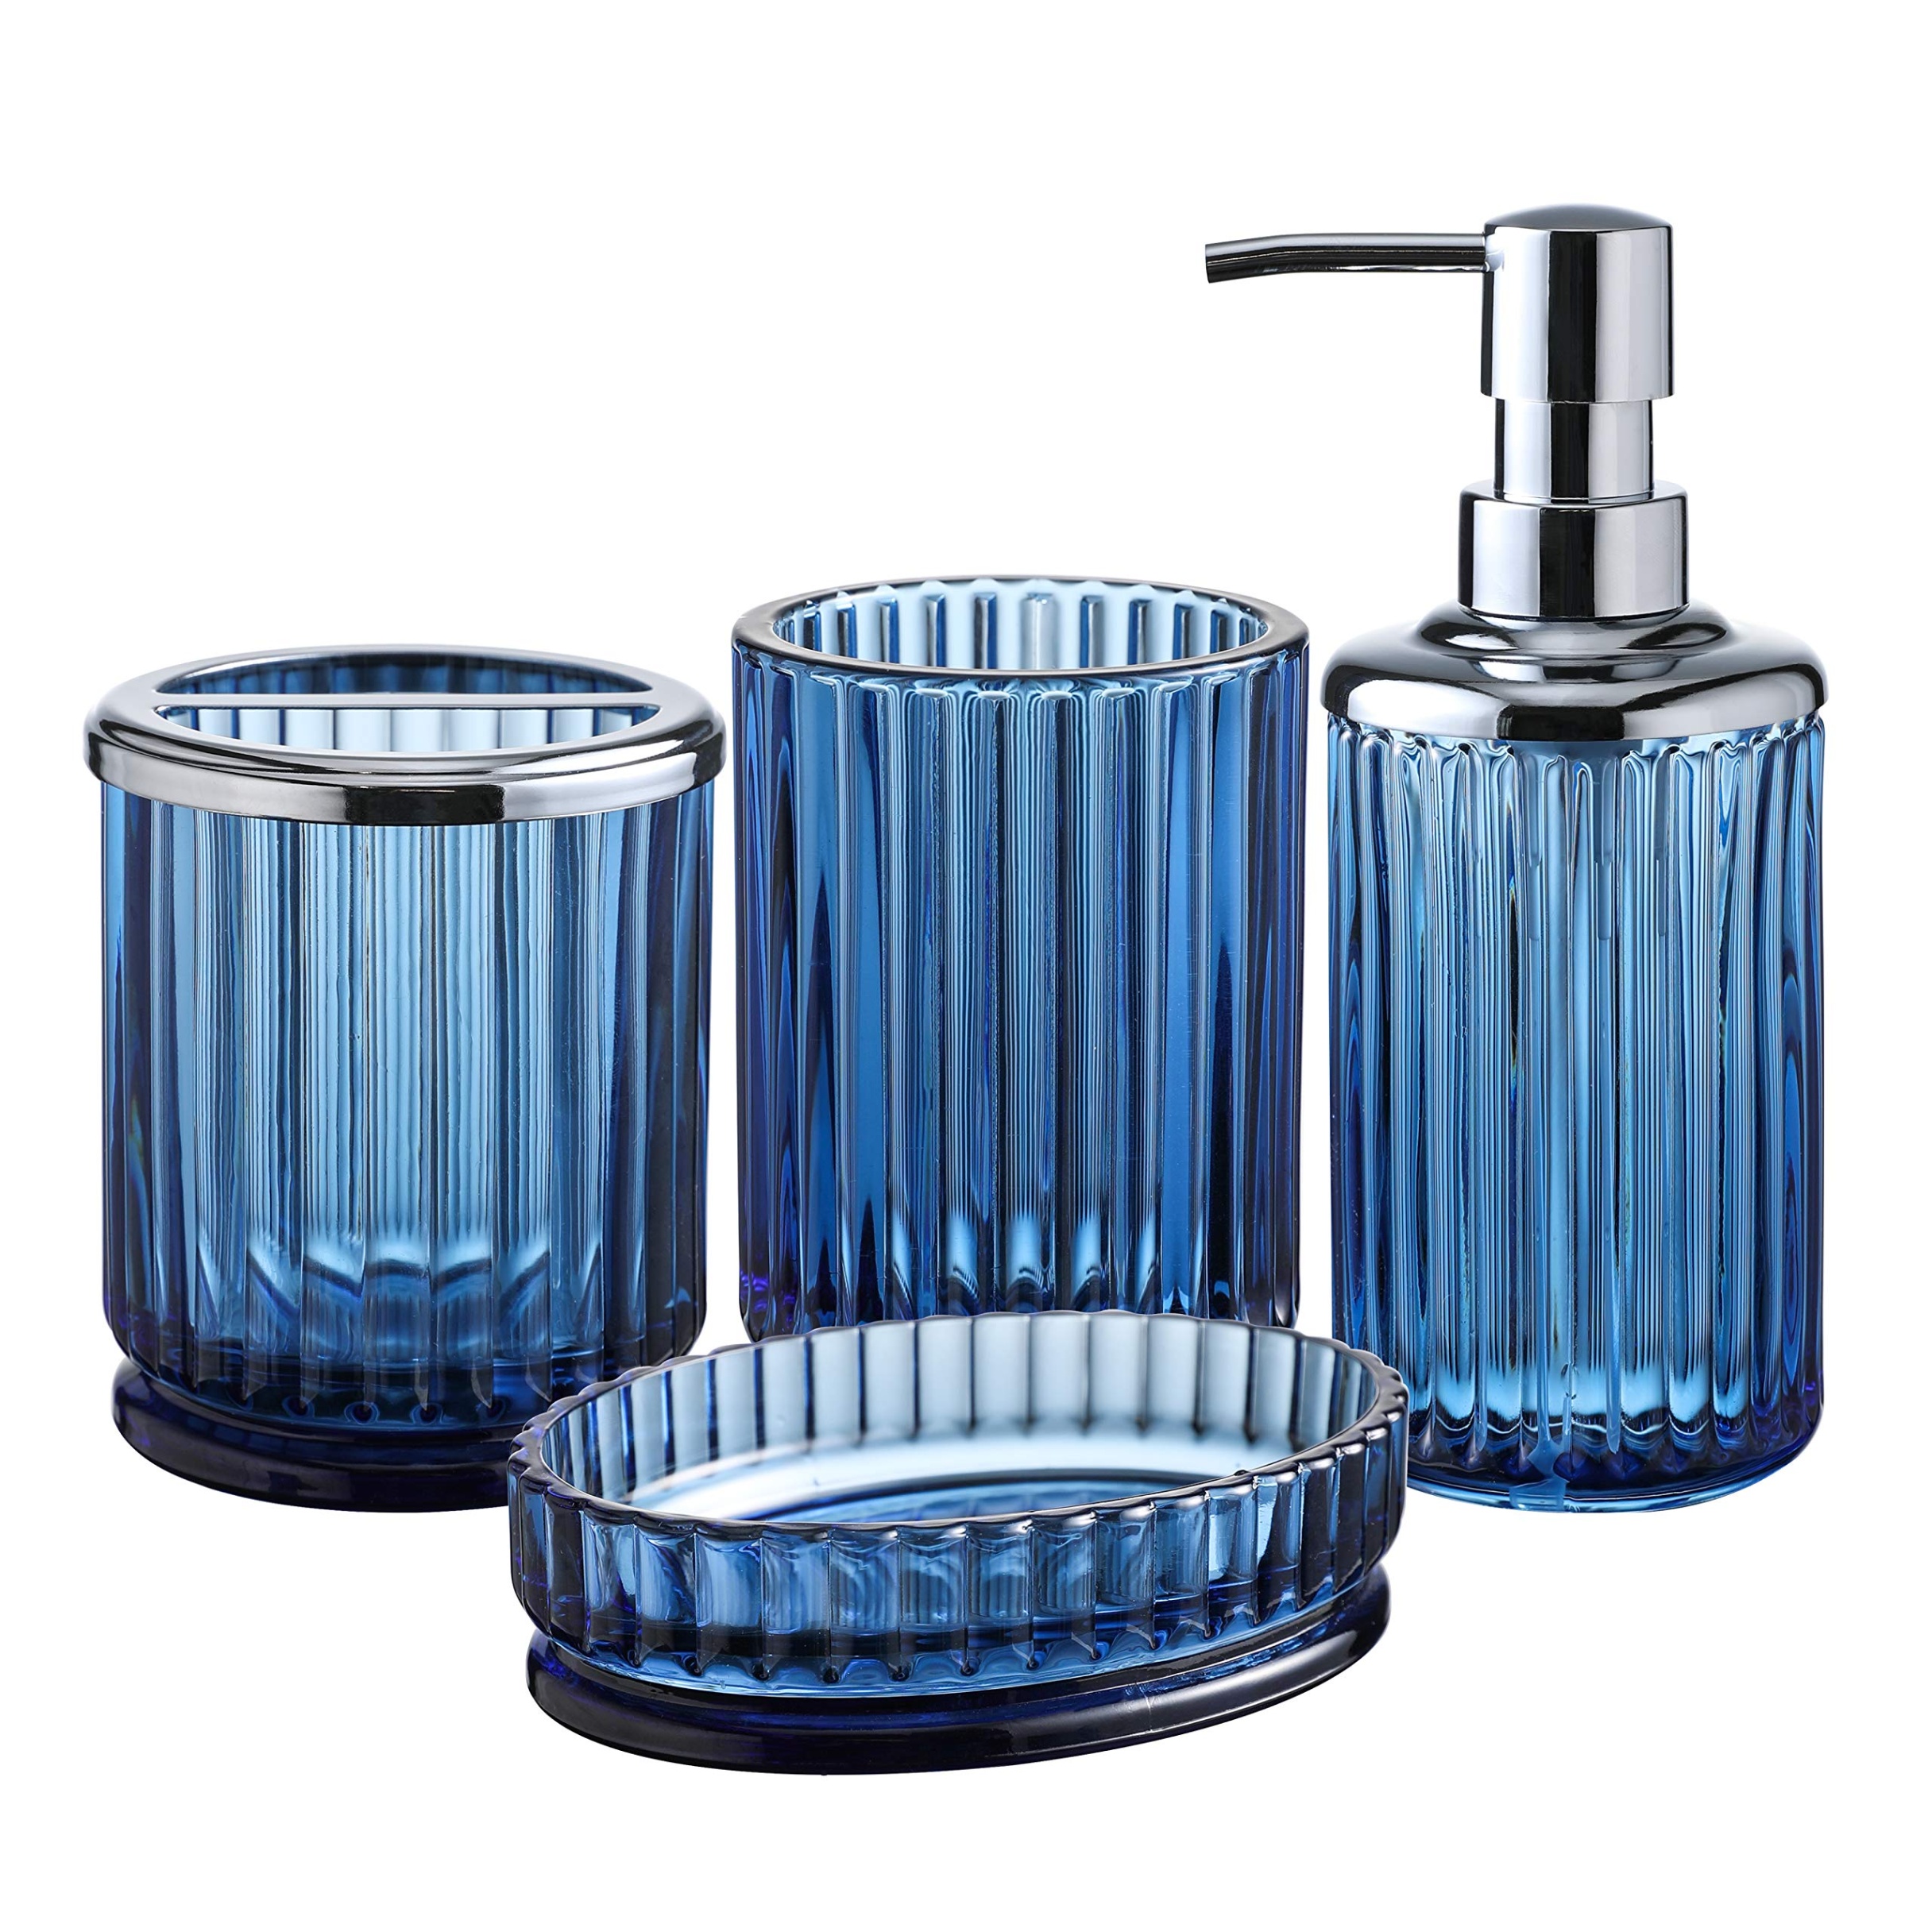 glass bathroom accessories Niche Utama Home PCs Heavy Weight Decent Blue Glass Bathroom Accessories Set with  Decorative Pressed Pattern - Includes Hand Soap Dispenser & Tumbler & Soap  Dish &